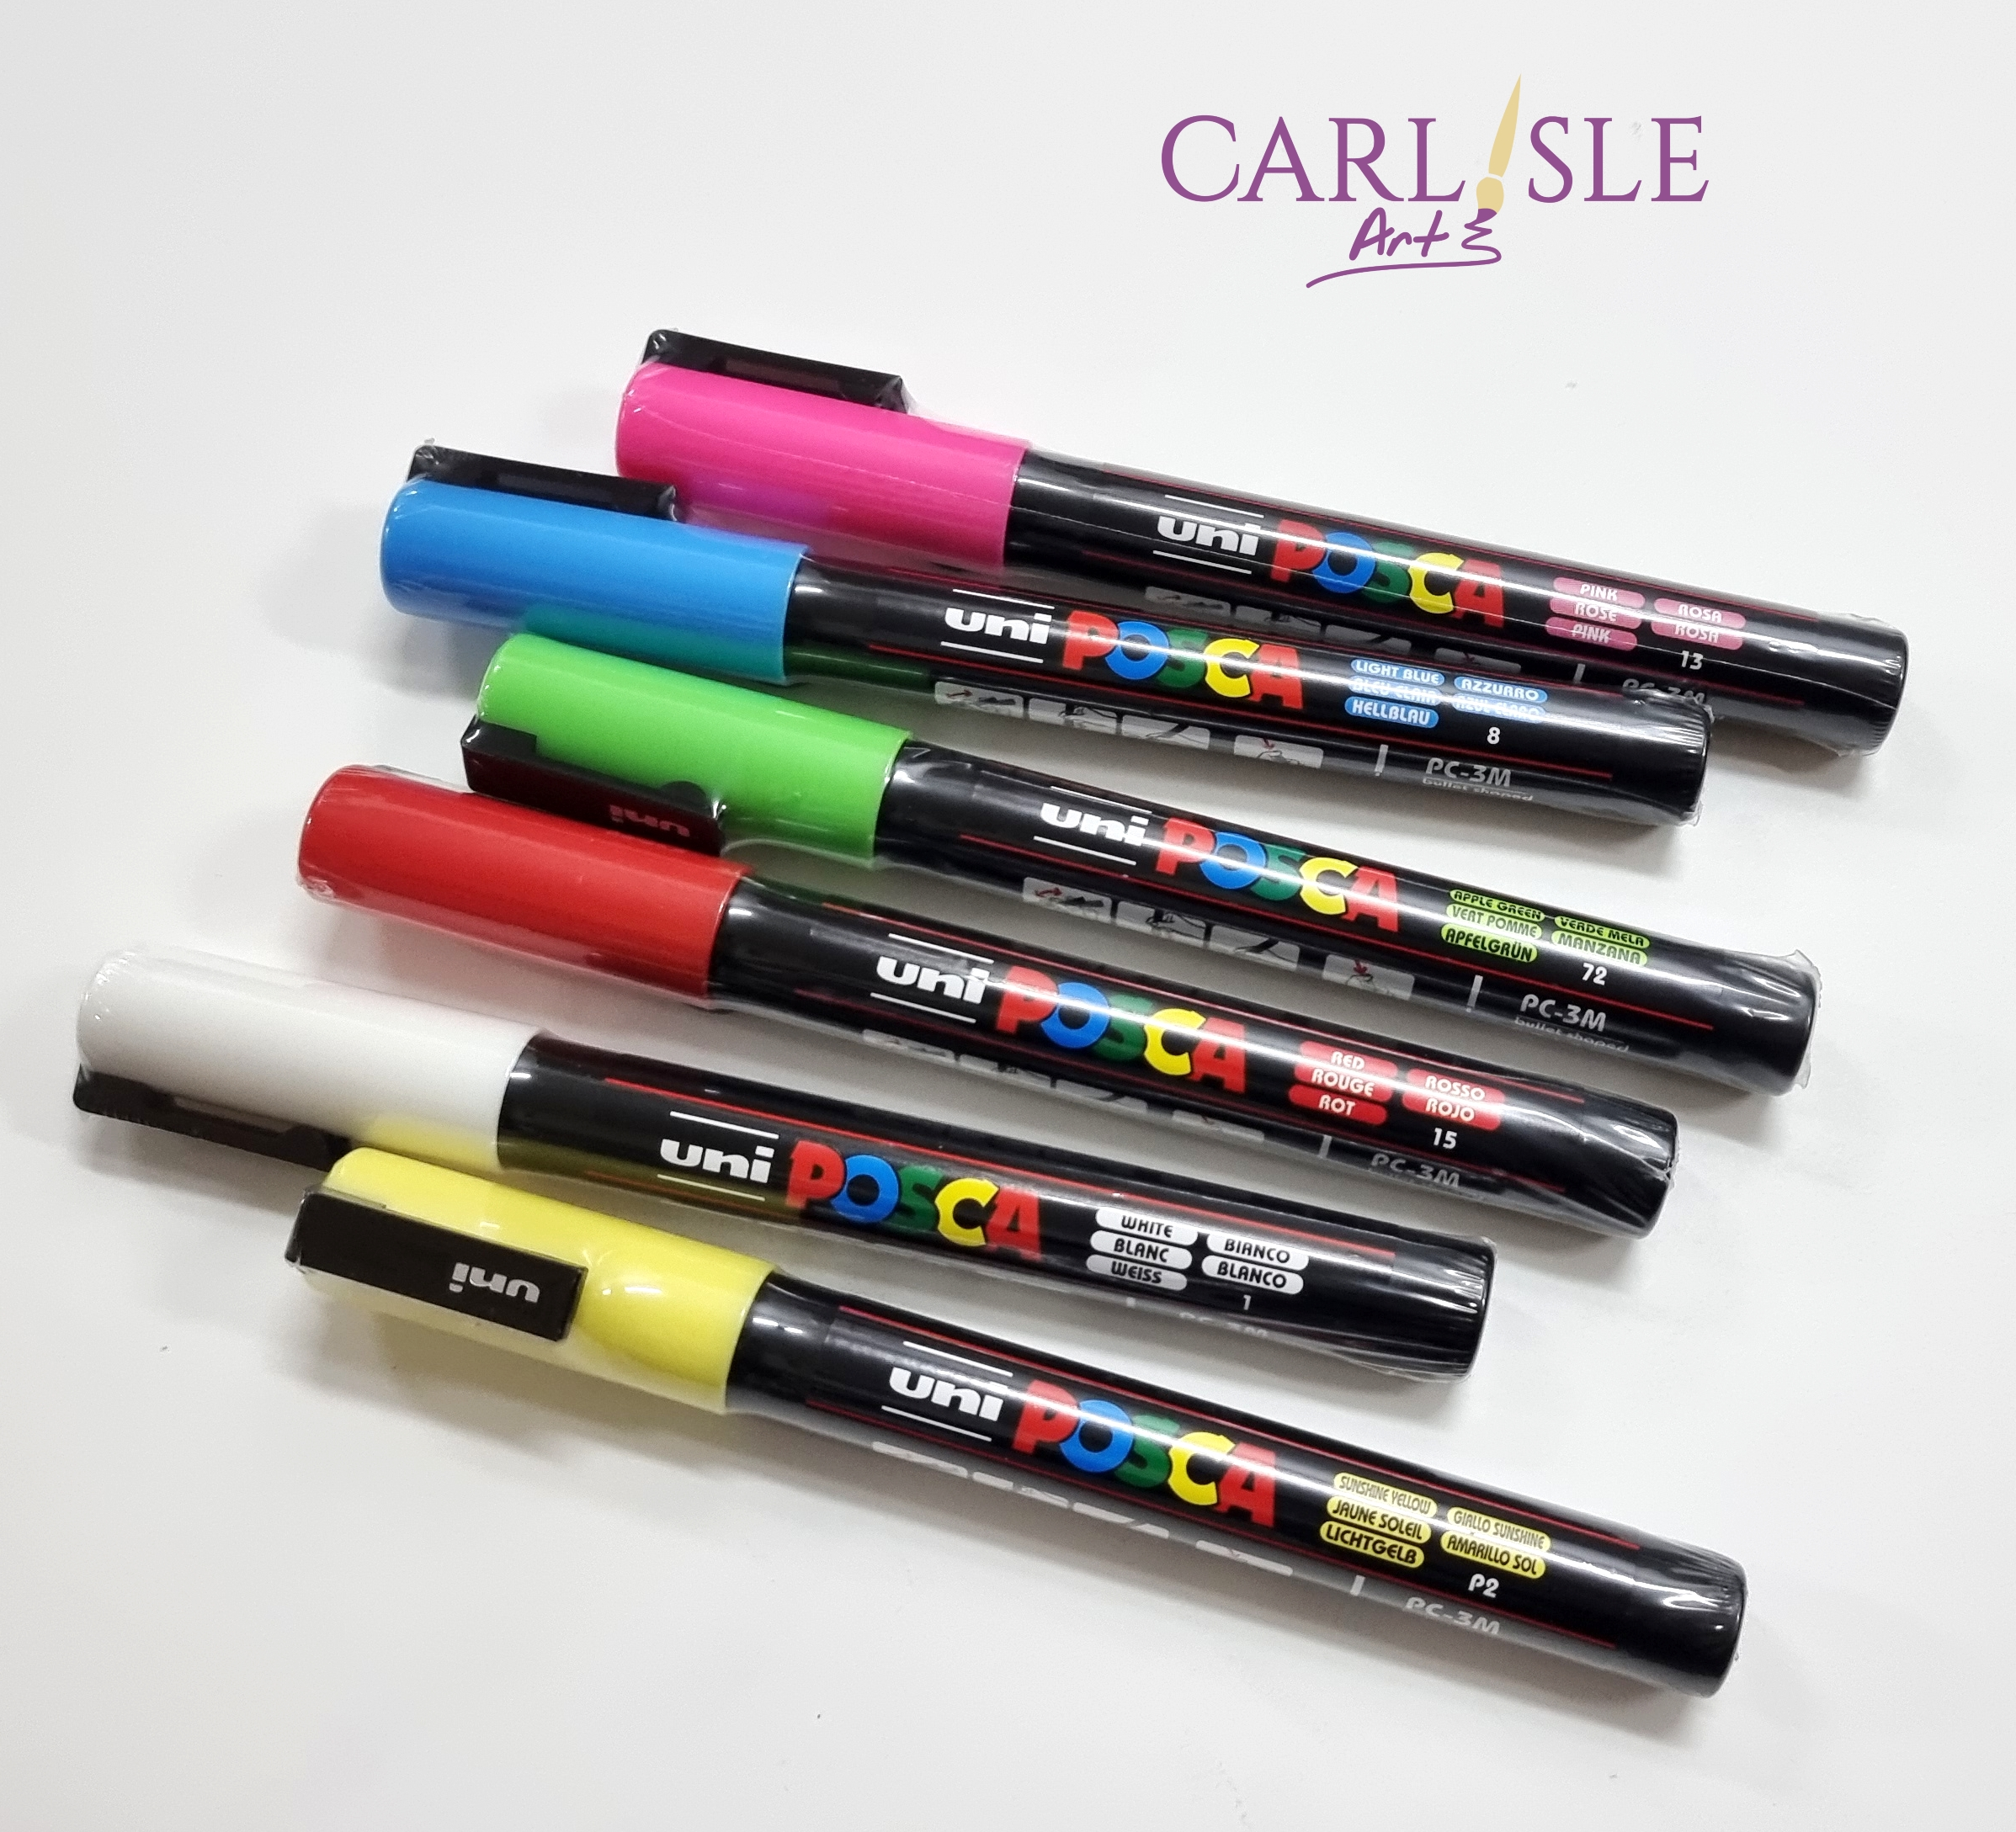 Carmel Paint Marker Large 8mm Chisel Tip Pack of 6, Multi-surface Paint  Pen, Permanent Oil-based Paint 